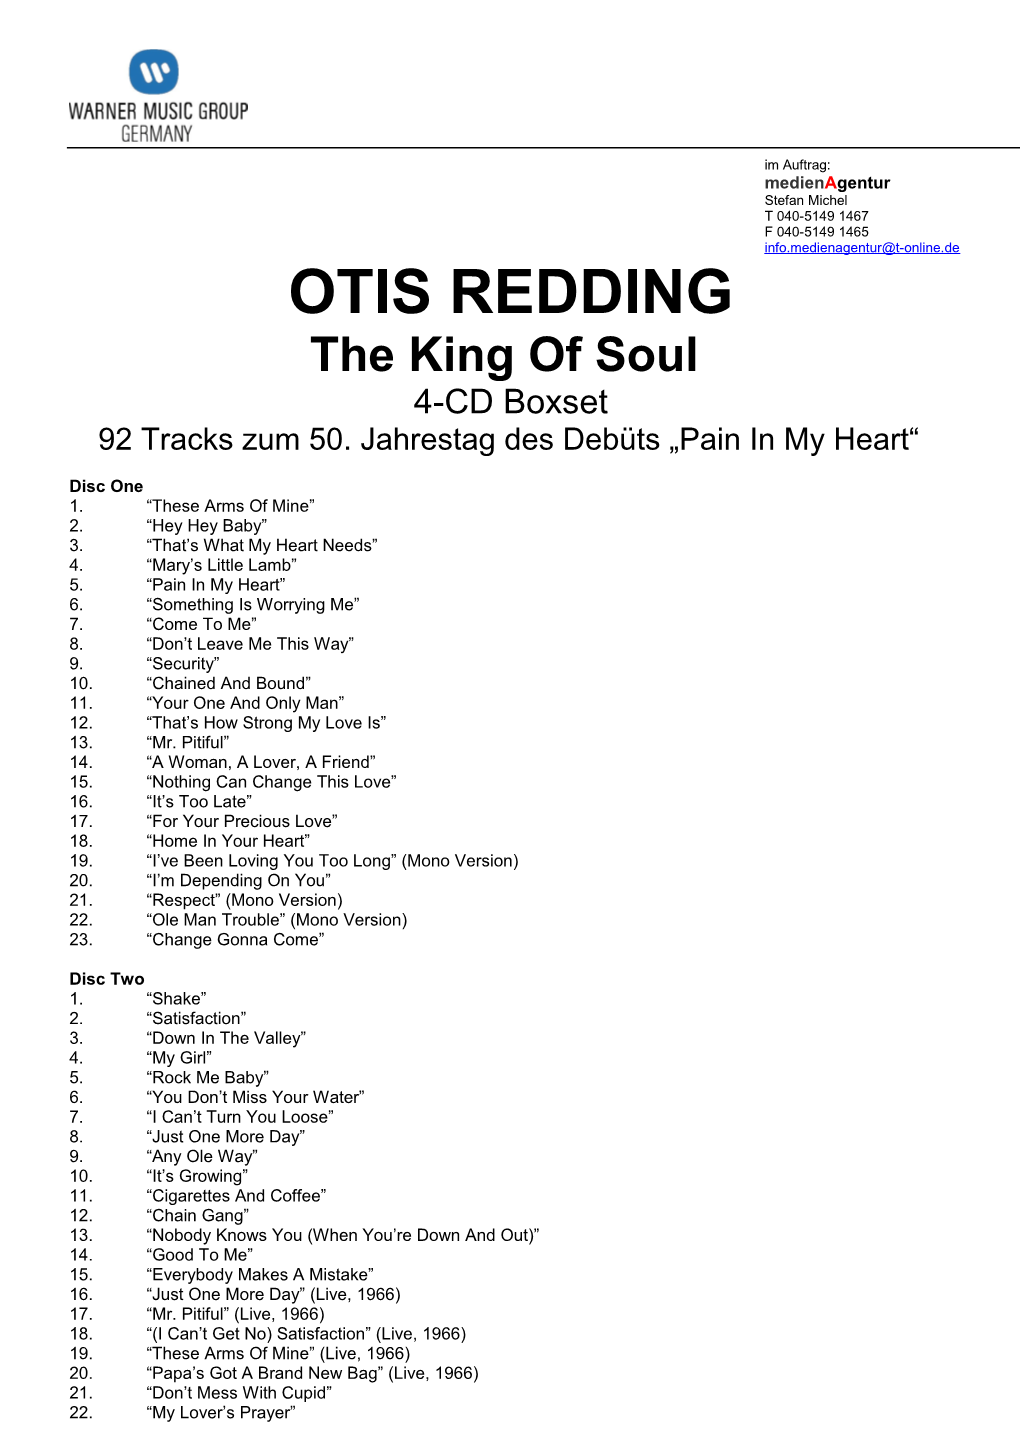 OTIS REDDING the King of Soul 4-CD Boxset 92 Tracks Zum 50